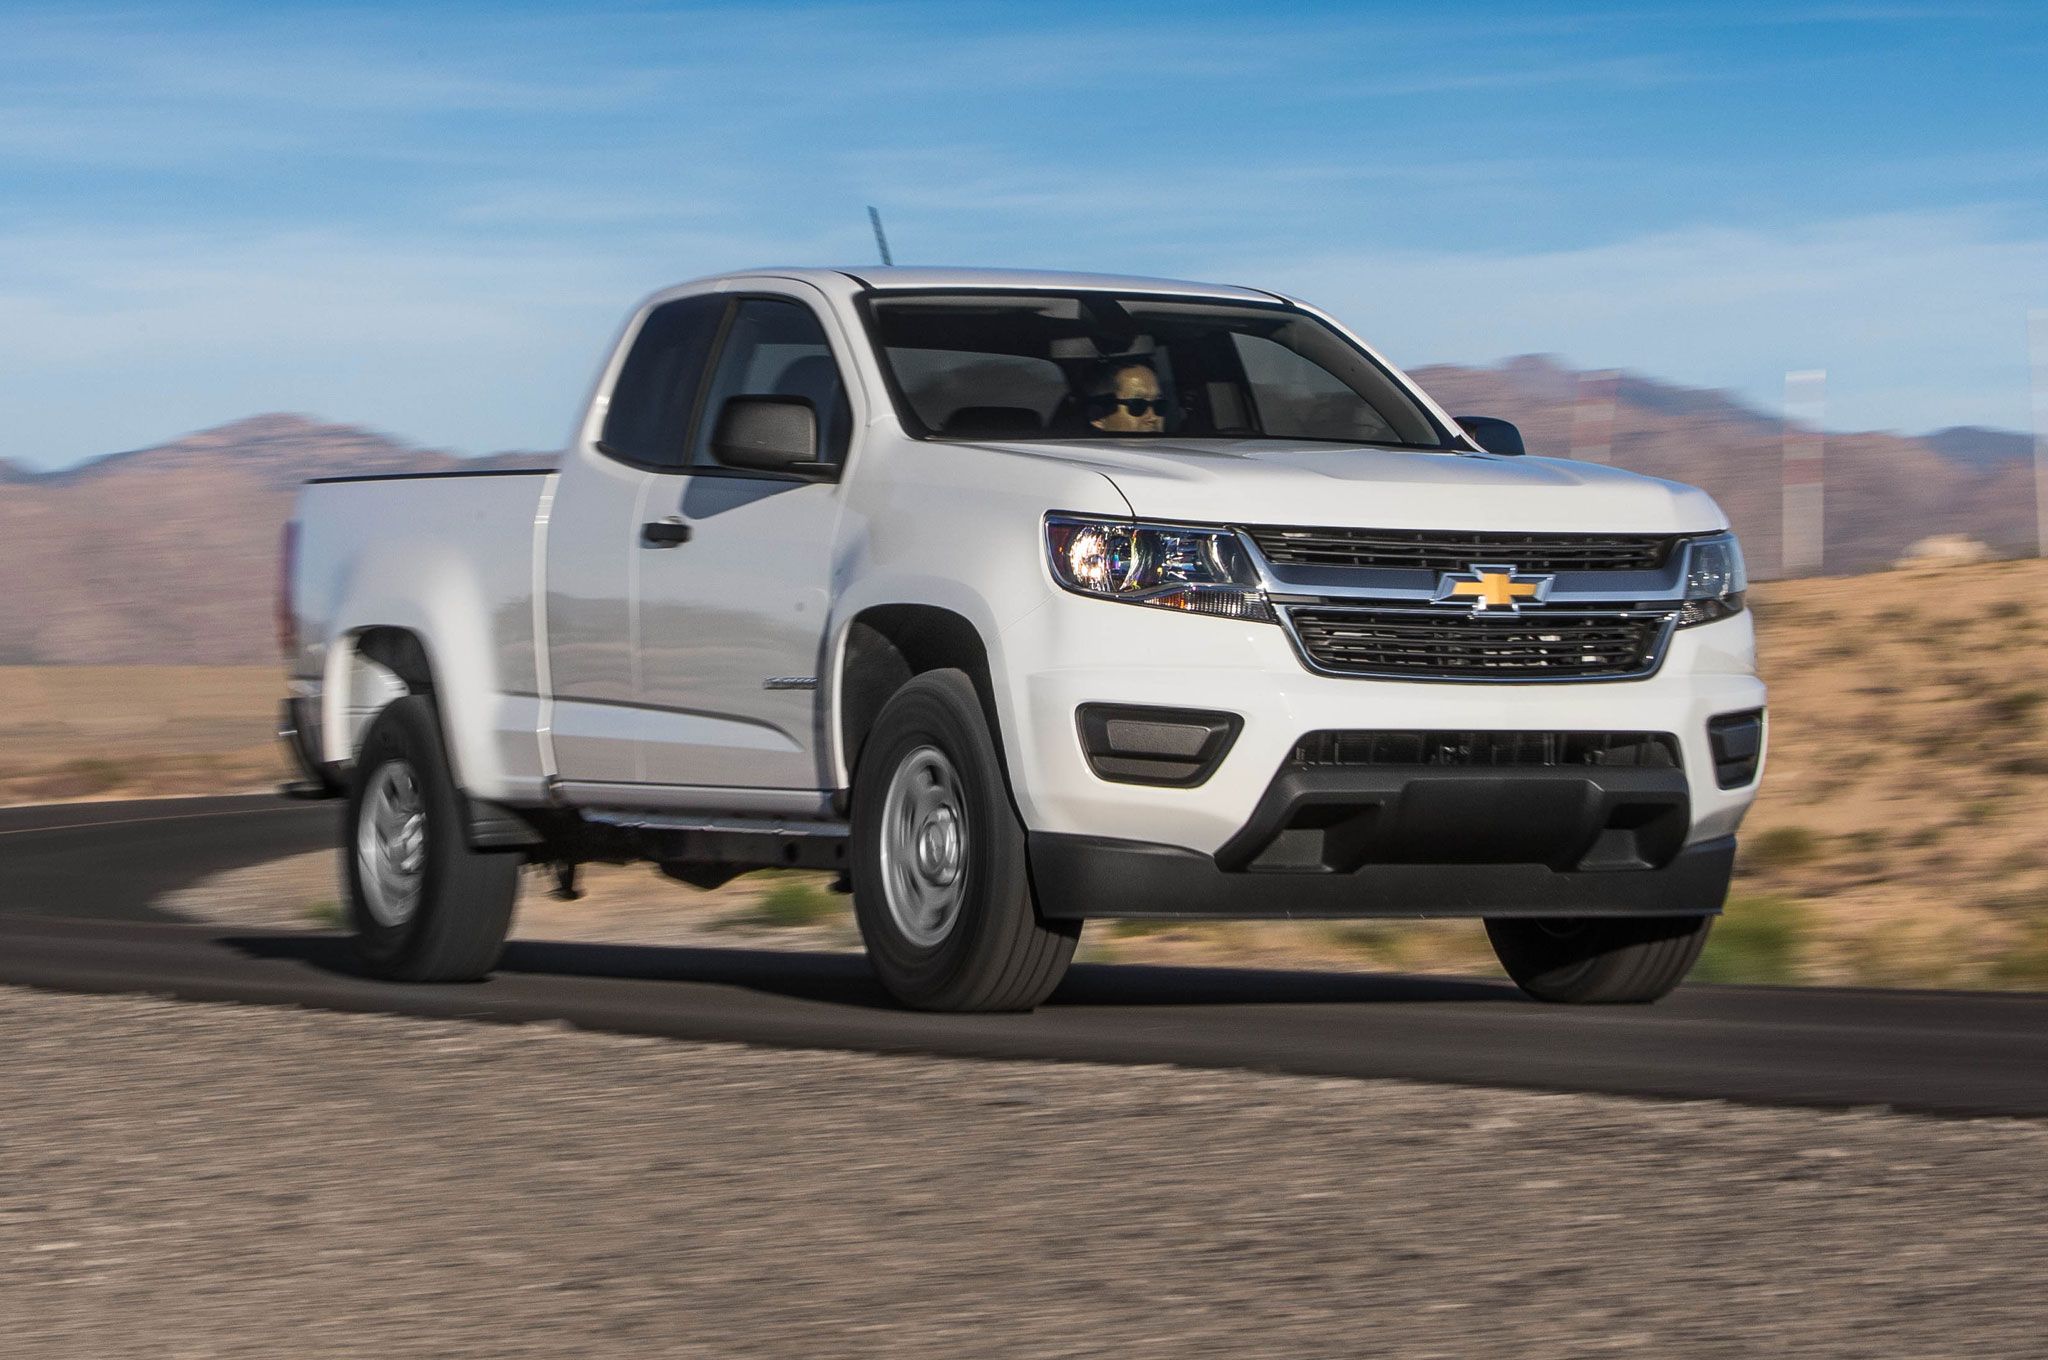 2015 Chevrolet Colorado White (View 1 of 8)